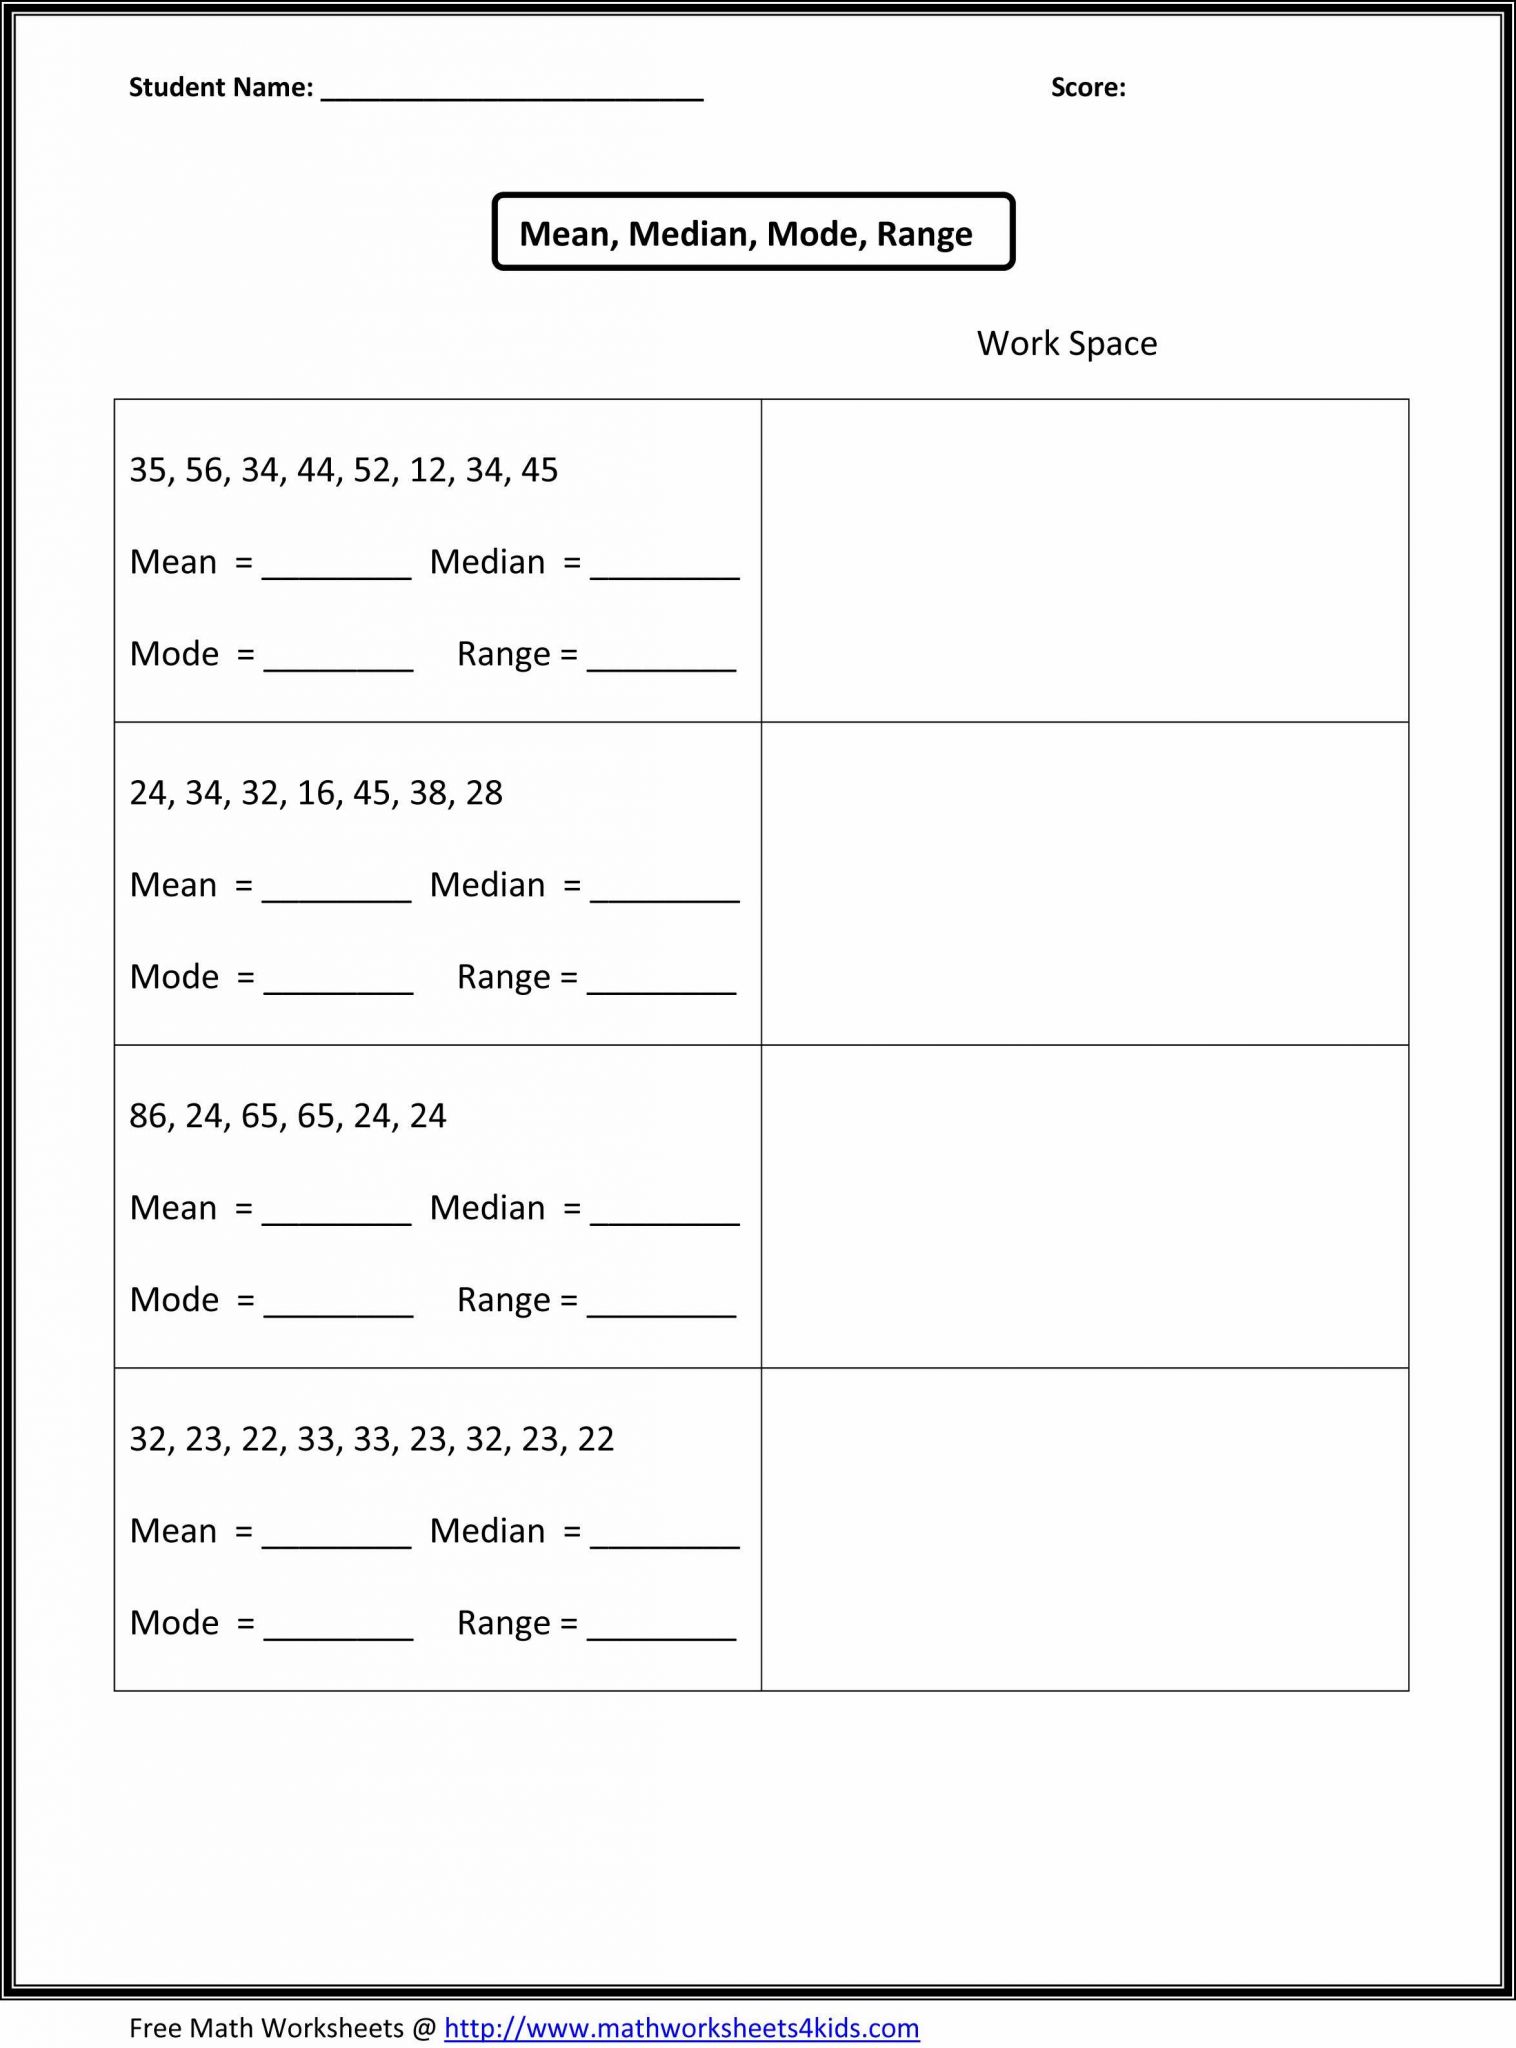 7th Grade Proportions Worksheet or Percent Proportion Worksheet 765fb2312a9b Battk